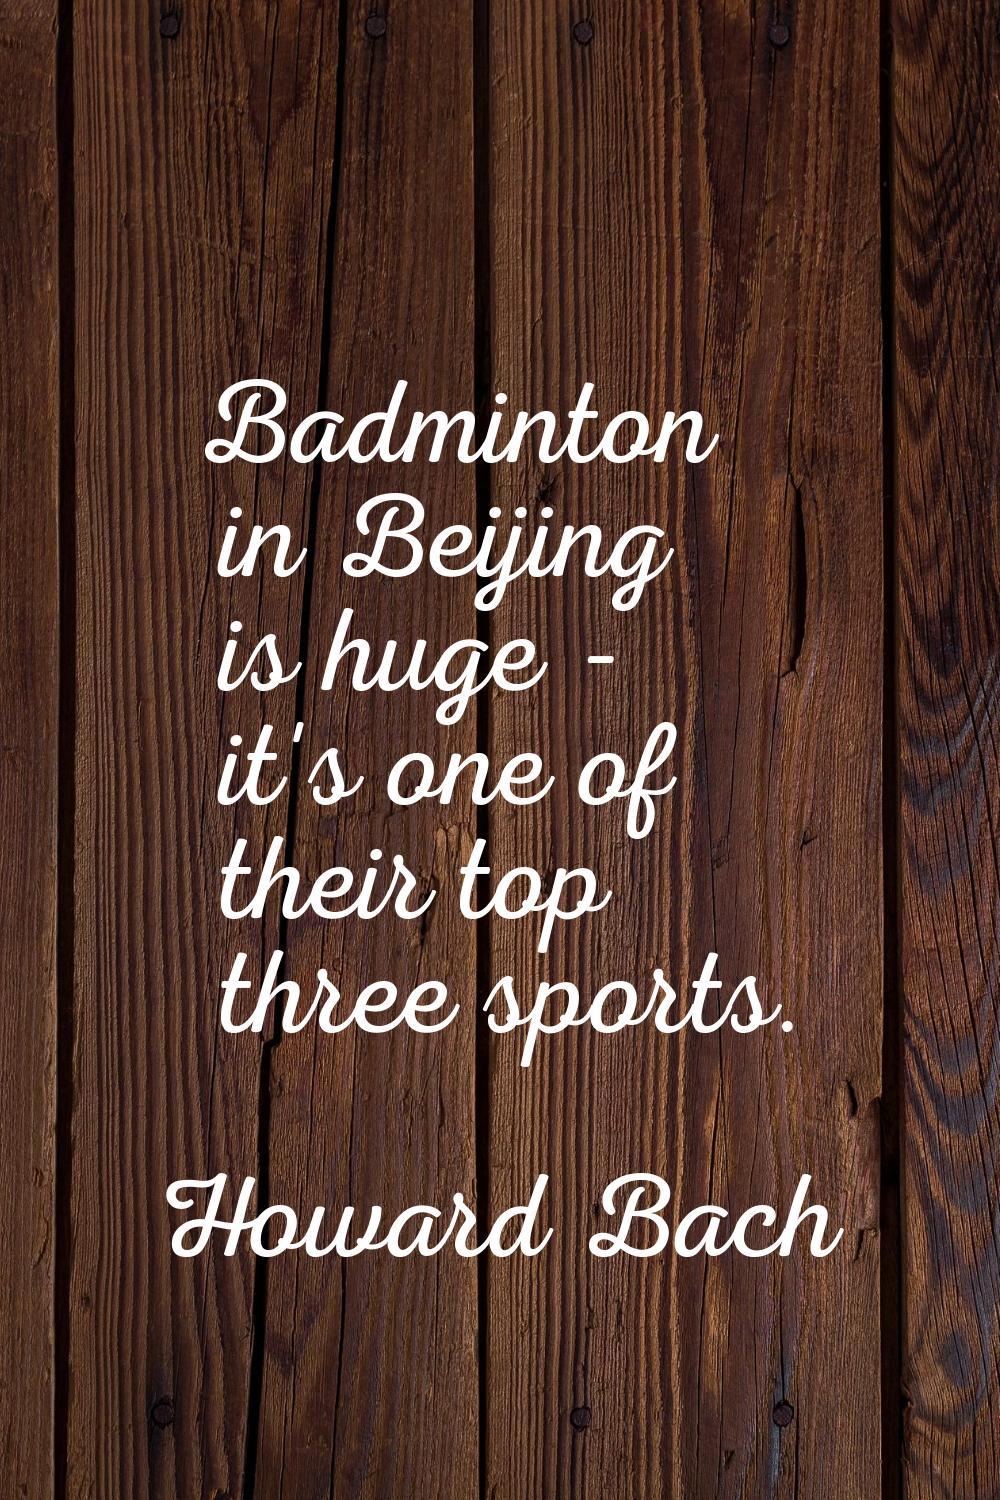 Badminton in Beijing is huge - it's one of their top three sports.